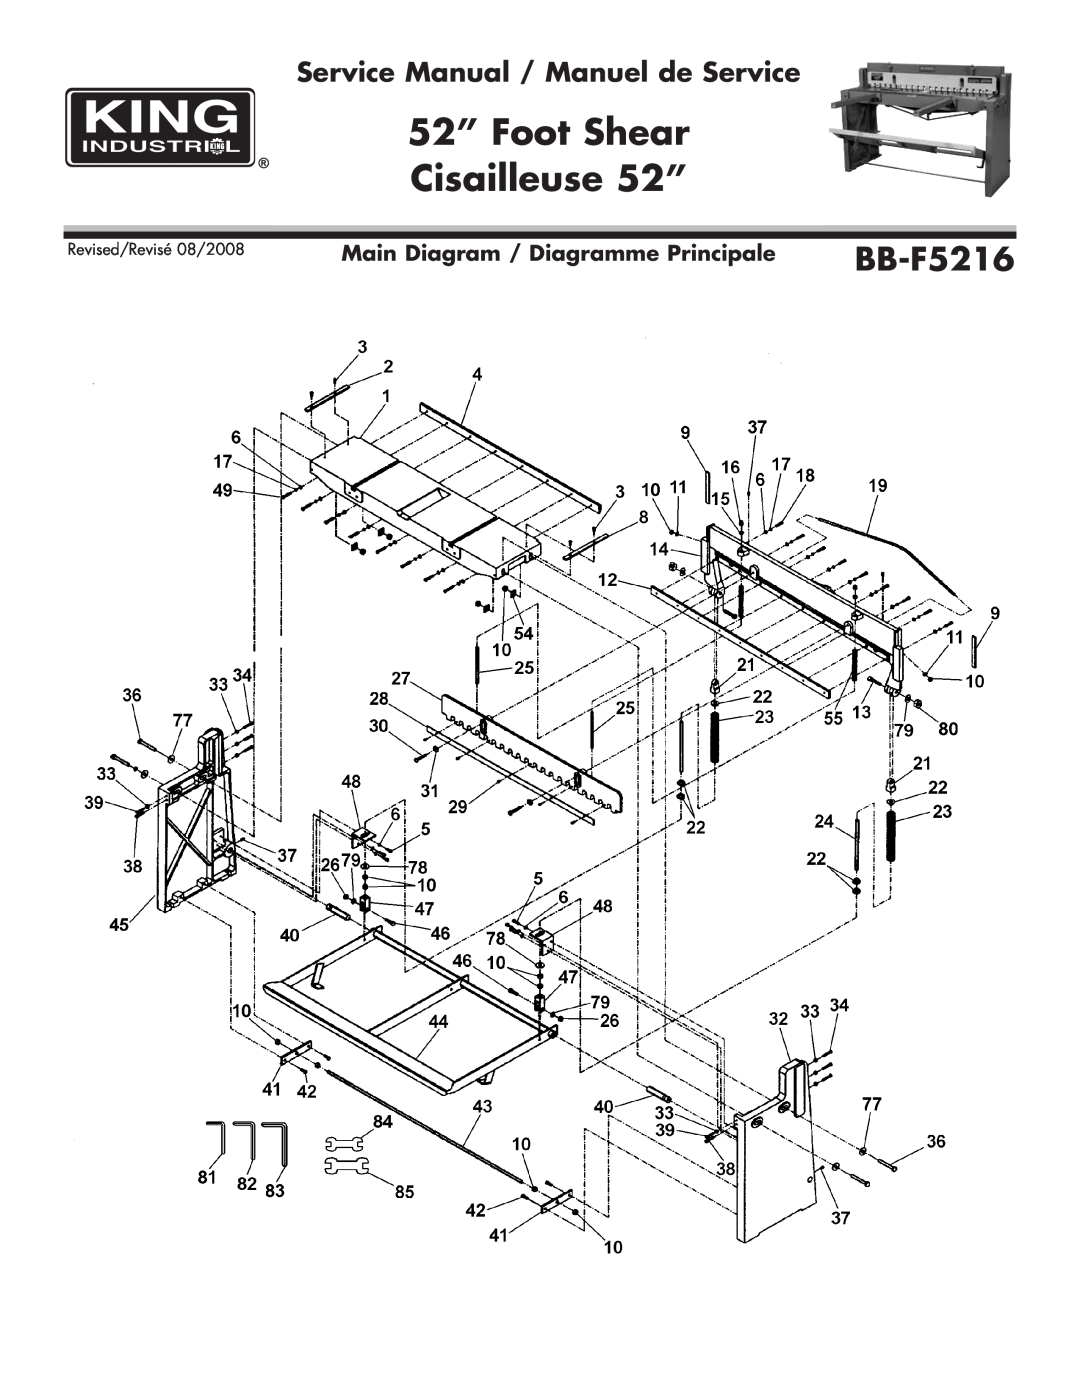 King Canada BB-F5216 service manual 52” Foot Shear Cisailleuse 52”, Main Diagram / Diagramme Principale 